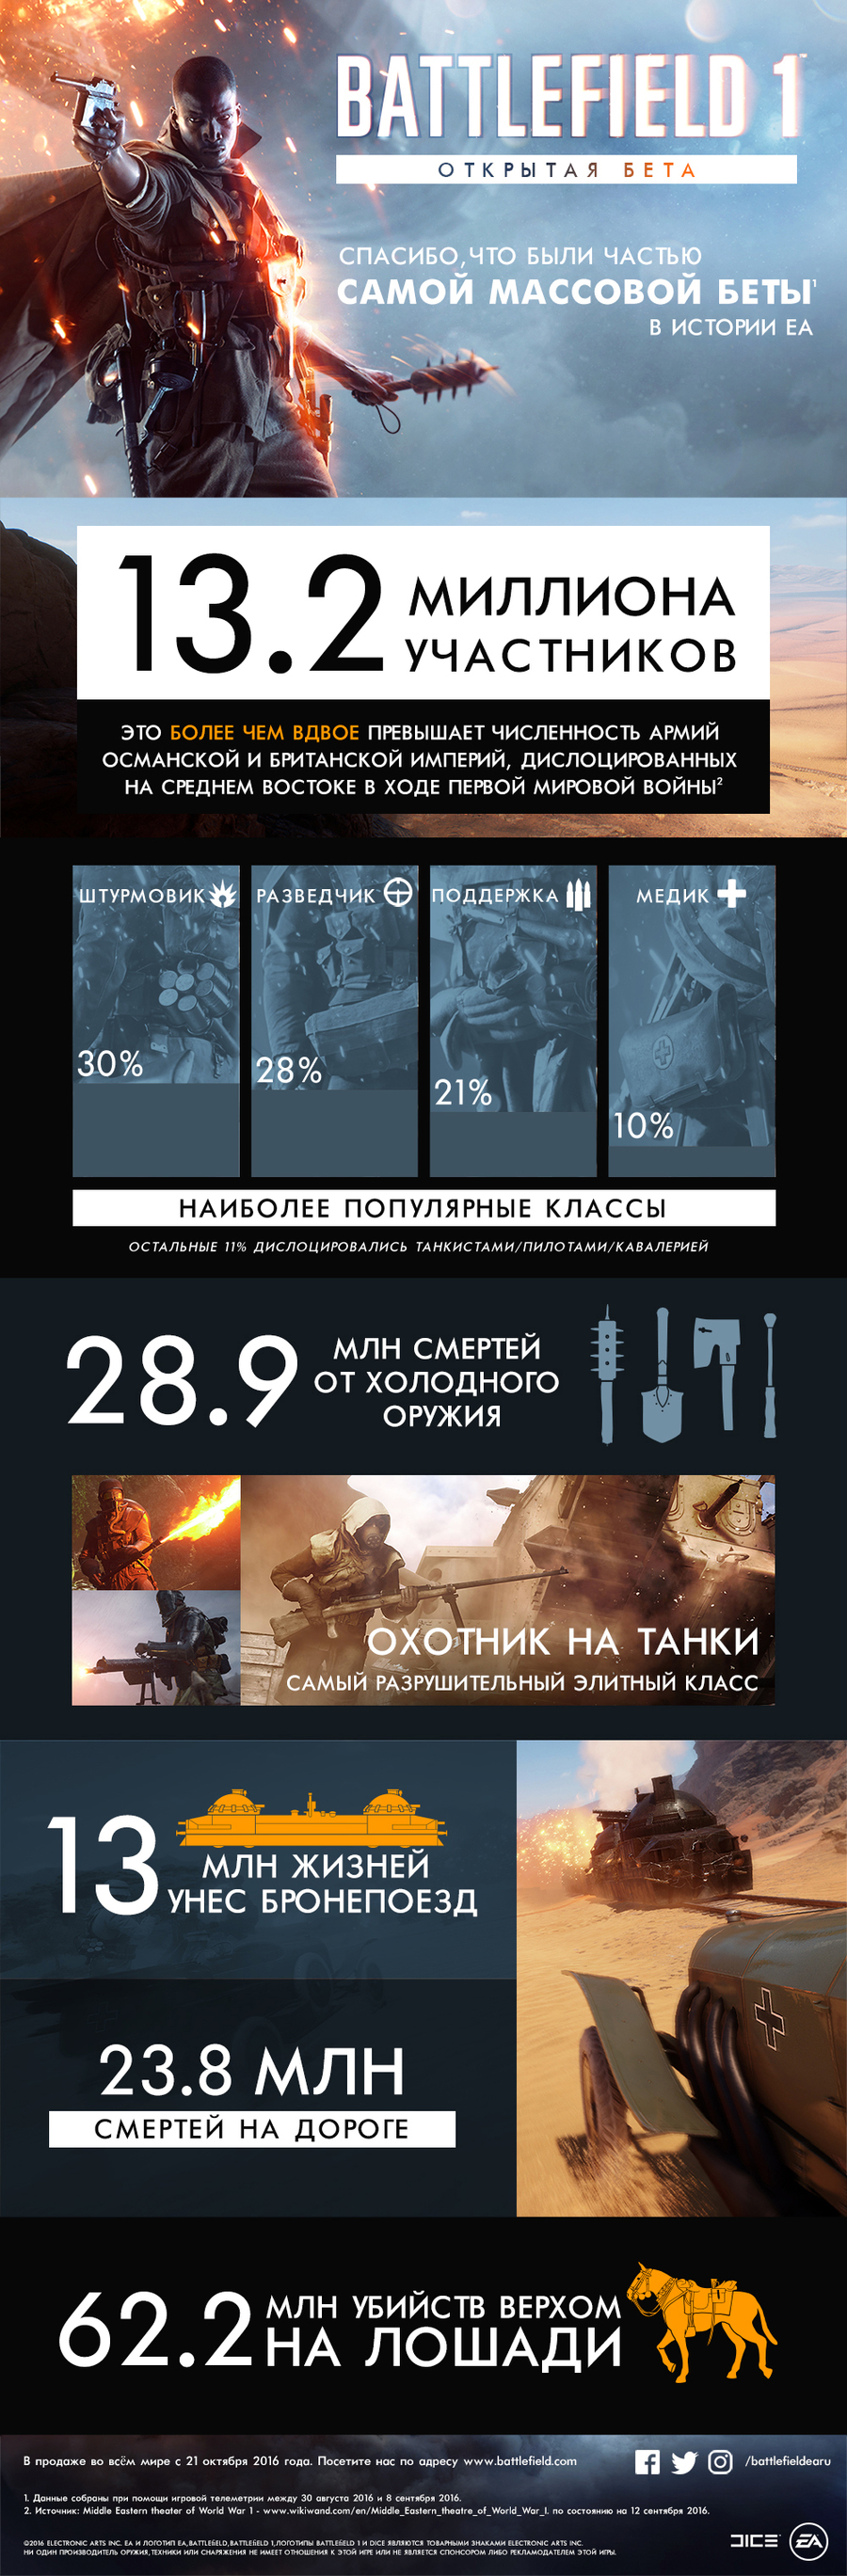 Battlefield-1-1474111442680365